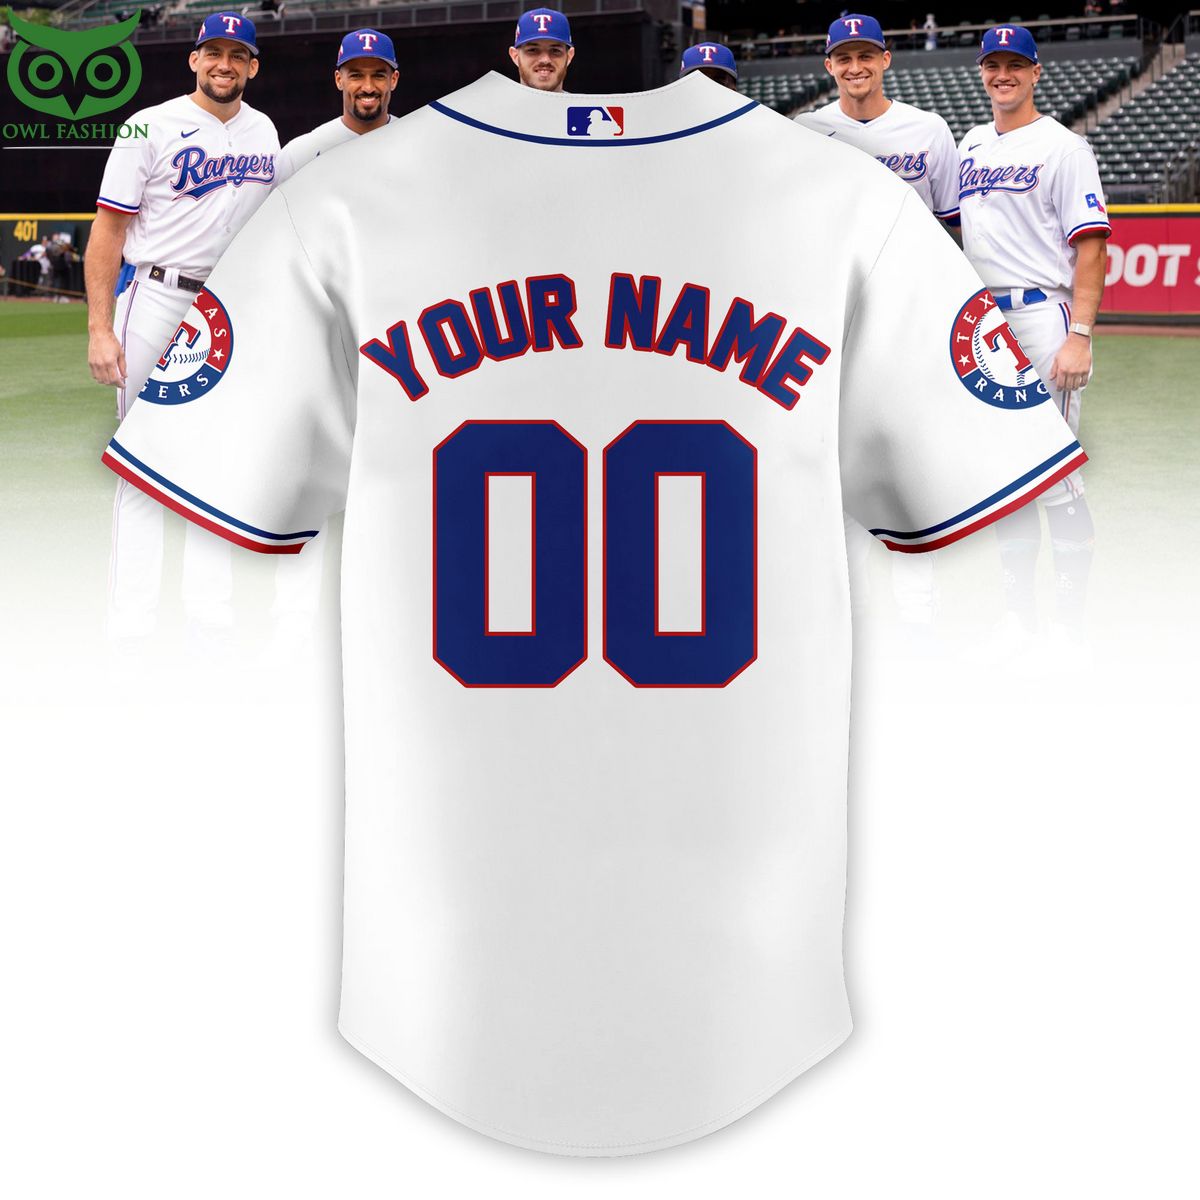 custome name number texas rangers mlb baseball jersey 3 Uu2uD.jpg